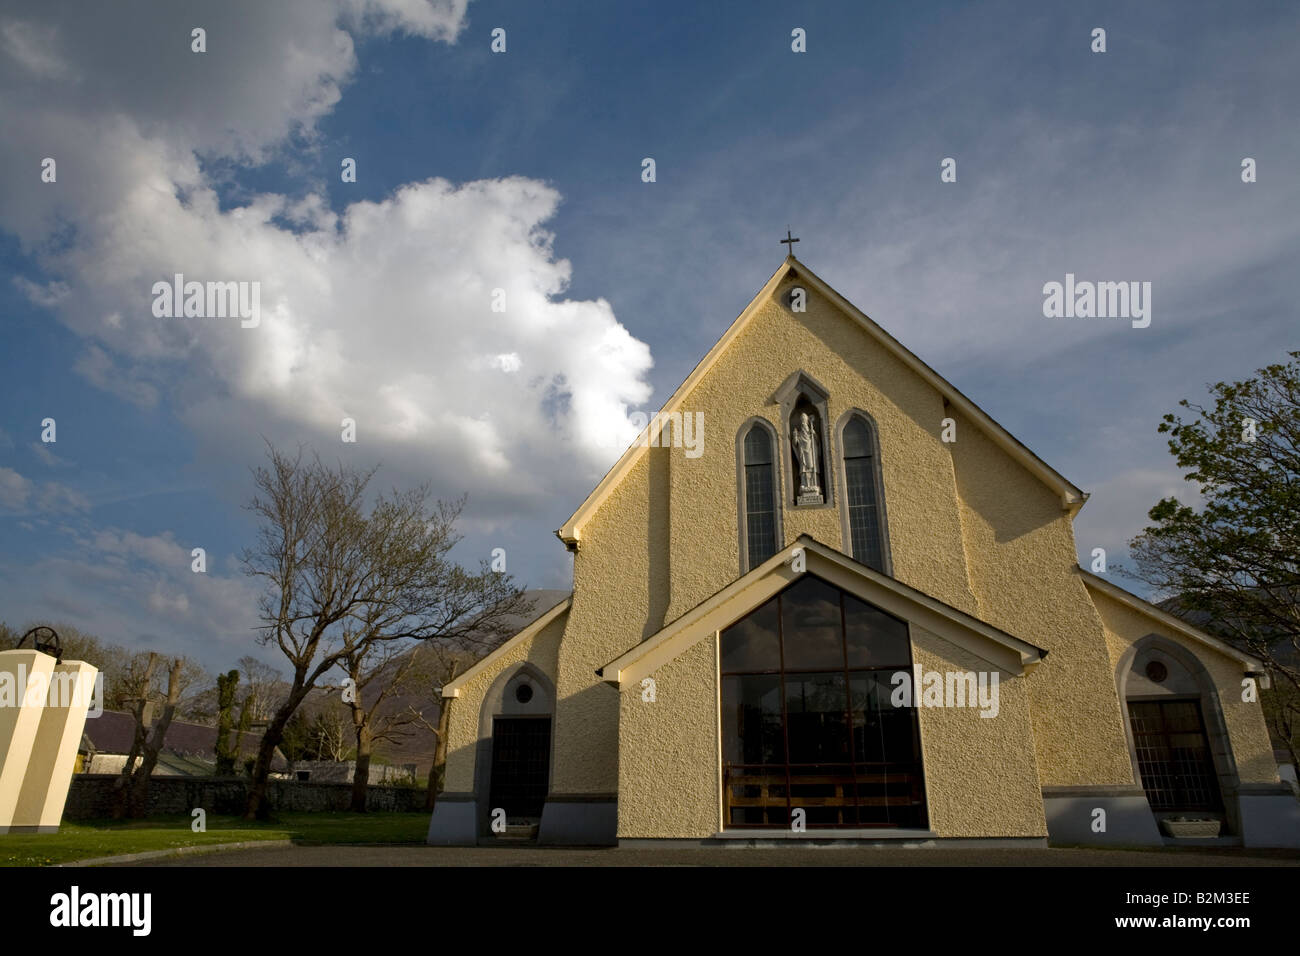 Church on the R335 road - Croagh Patrick - Kilsallagh - Leckanvy - Louisburgh - Mayo - Ireland Stock Photo